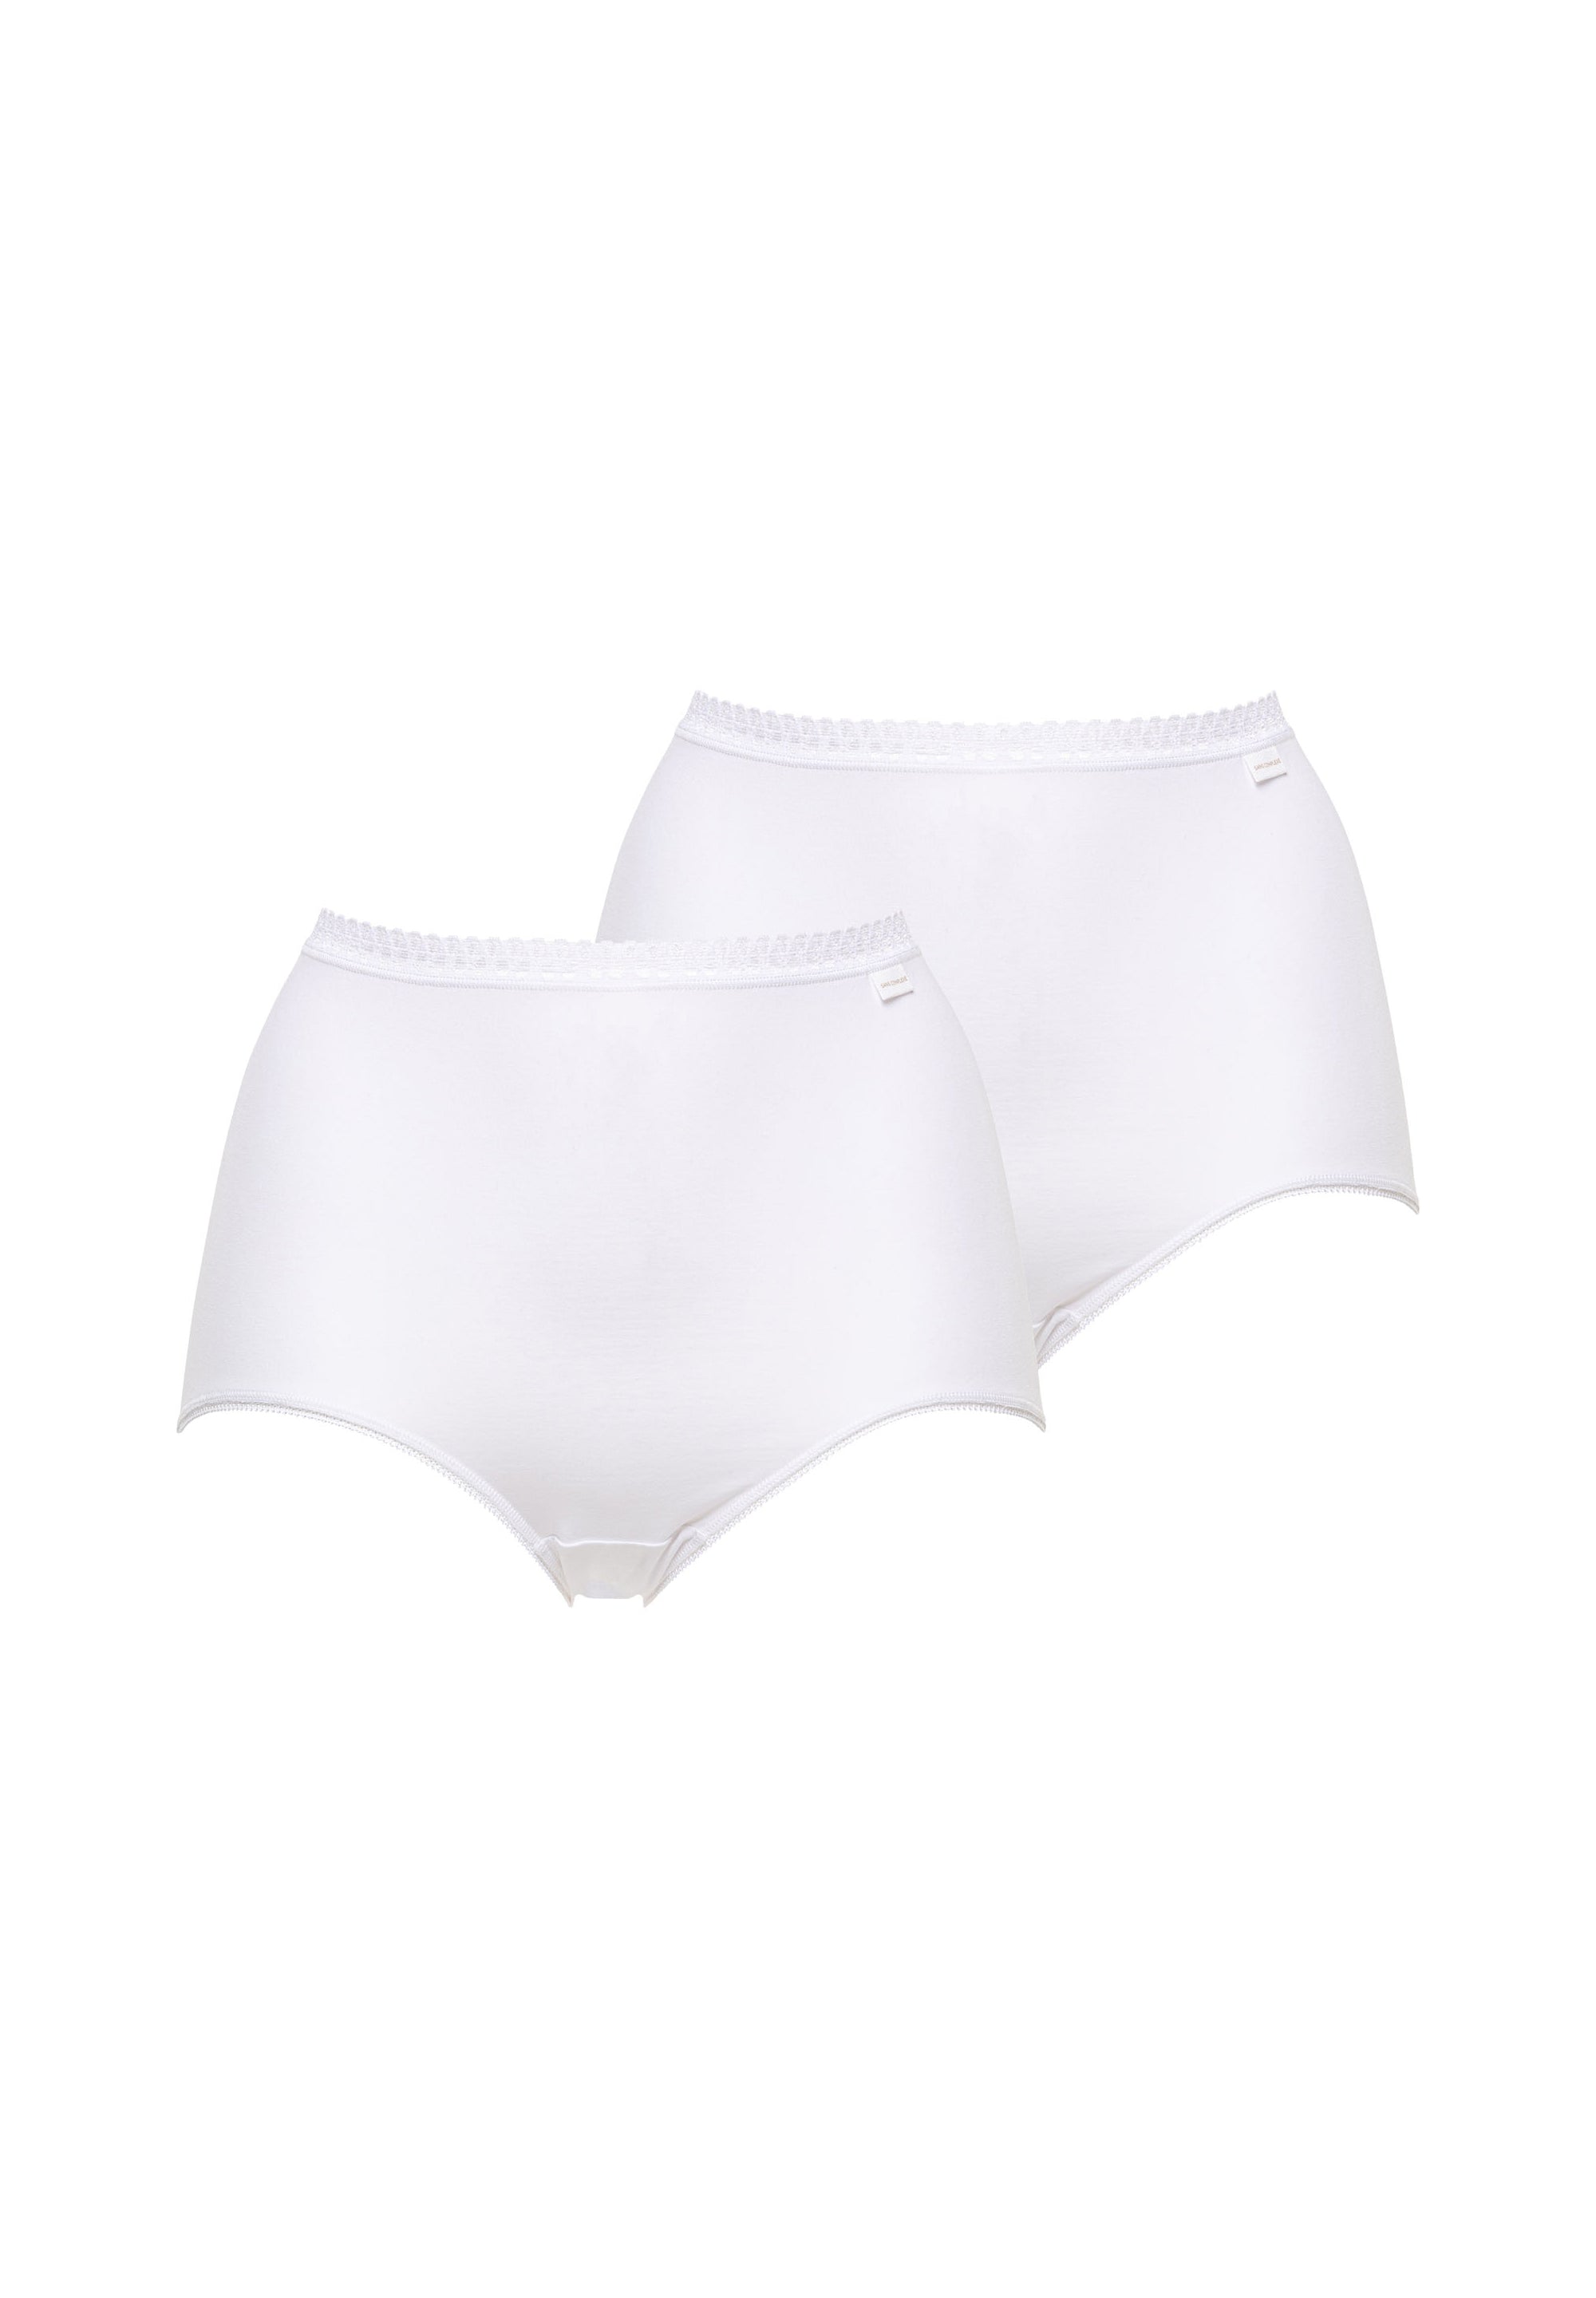 Panties - Pack of 2 Classic Cotton B White+White 